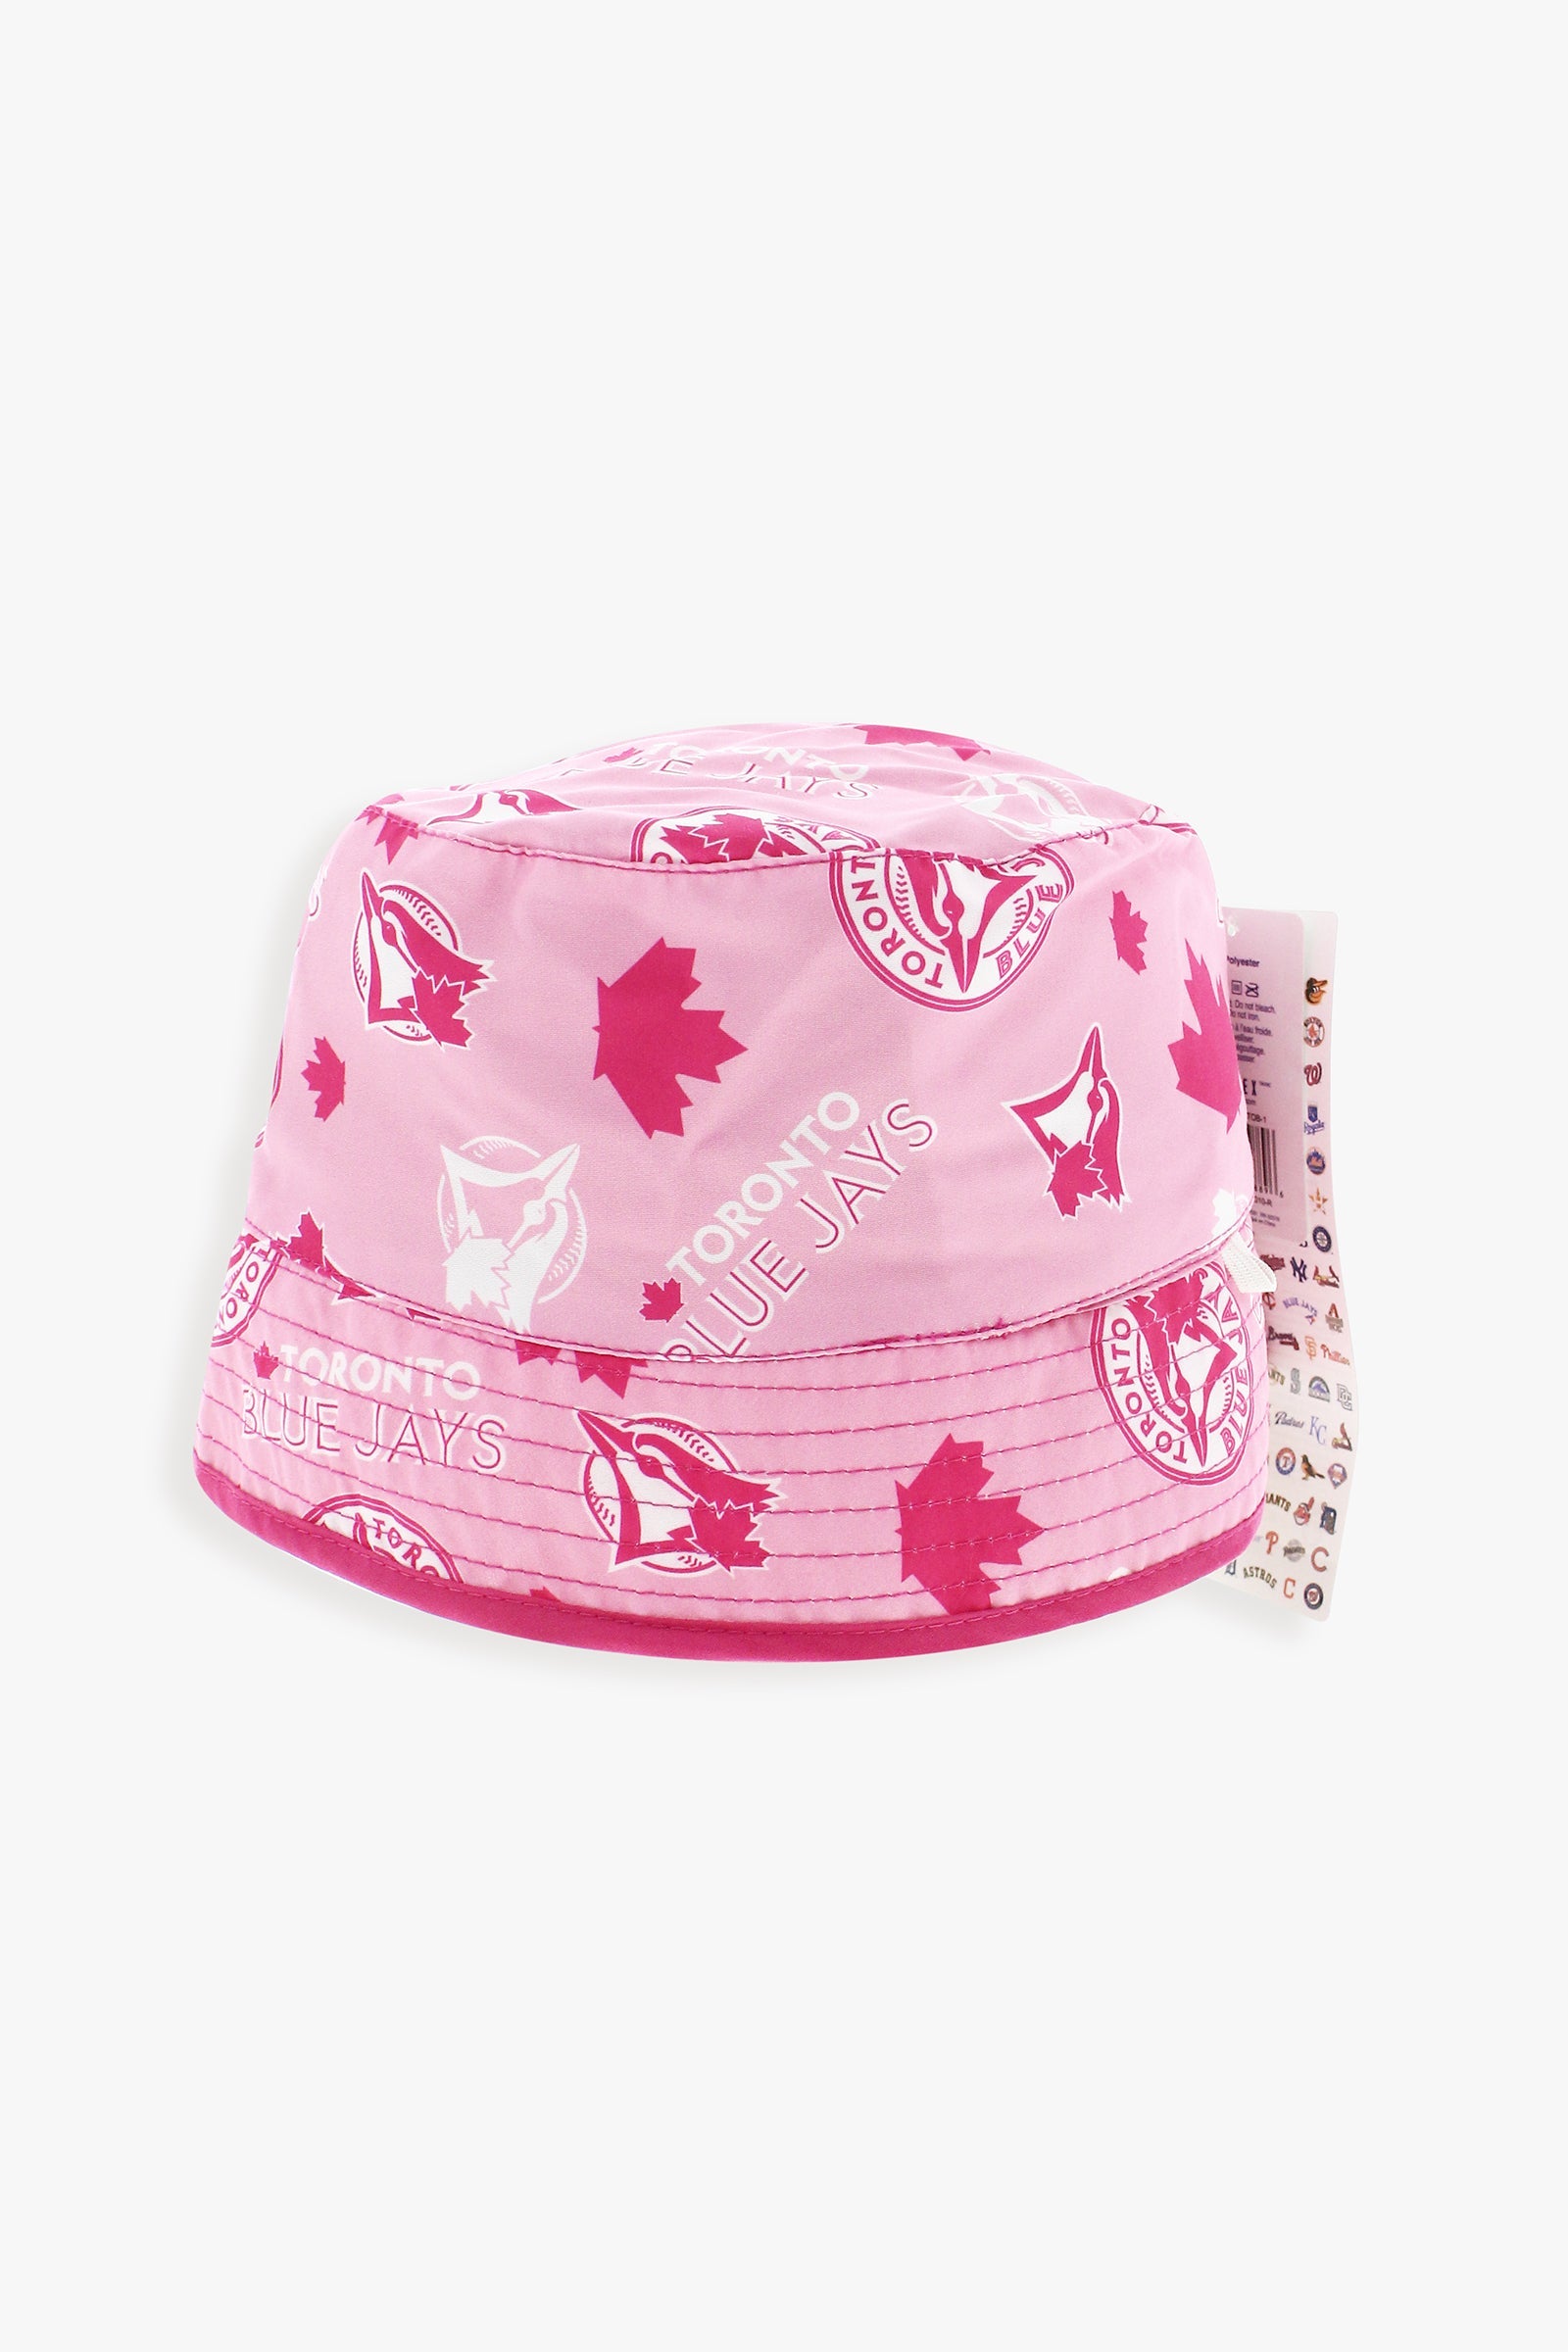 Gertex MLB Toronto Blue Jays Youth Girls 4-6T Packable Bucket Hat